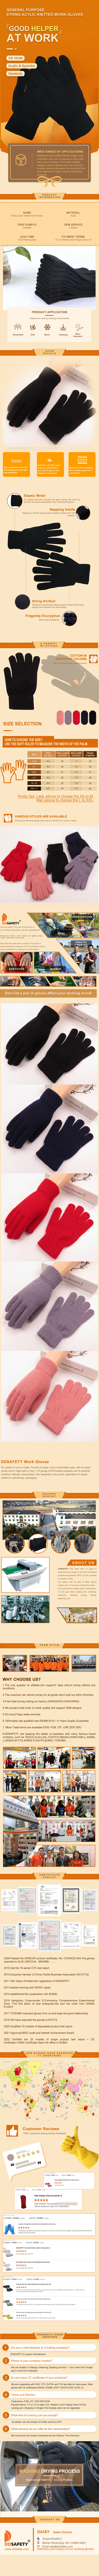 Black Warmer Acrylic With Spandex Magic Gloves - Wool Gloves - DCK509 Black Warmer Acrylic With Spandex Magic Gloves - Wool Gloves - DCK509 gloves,mittens,magic gloves,Acrylic gloves,warm gloves,Wool Gloves